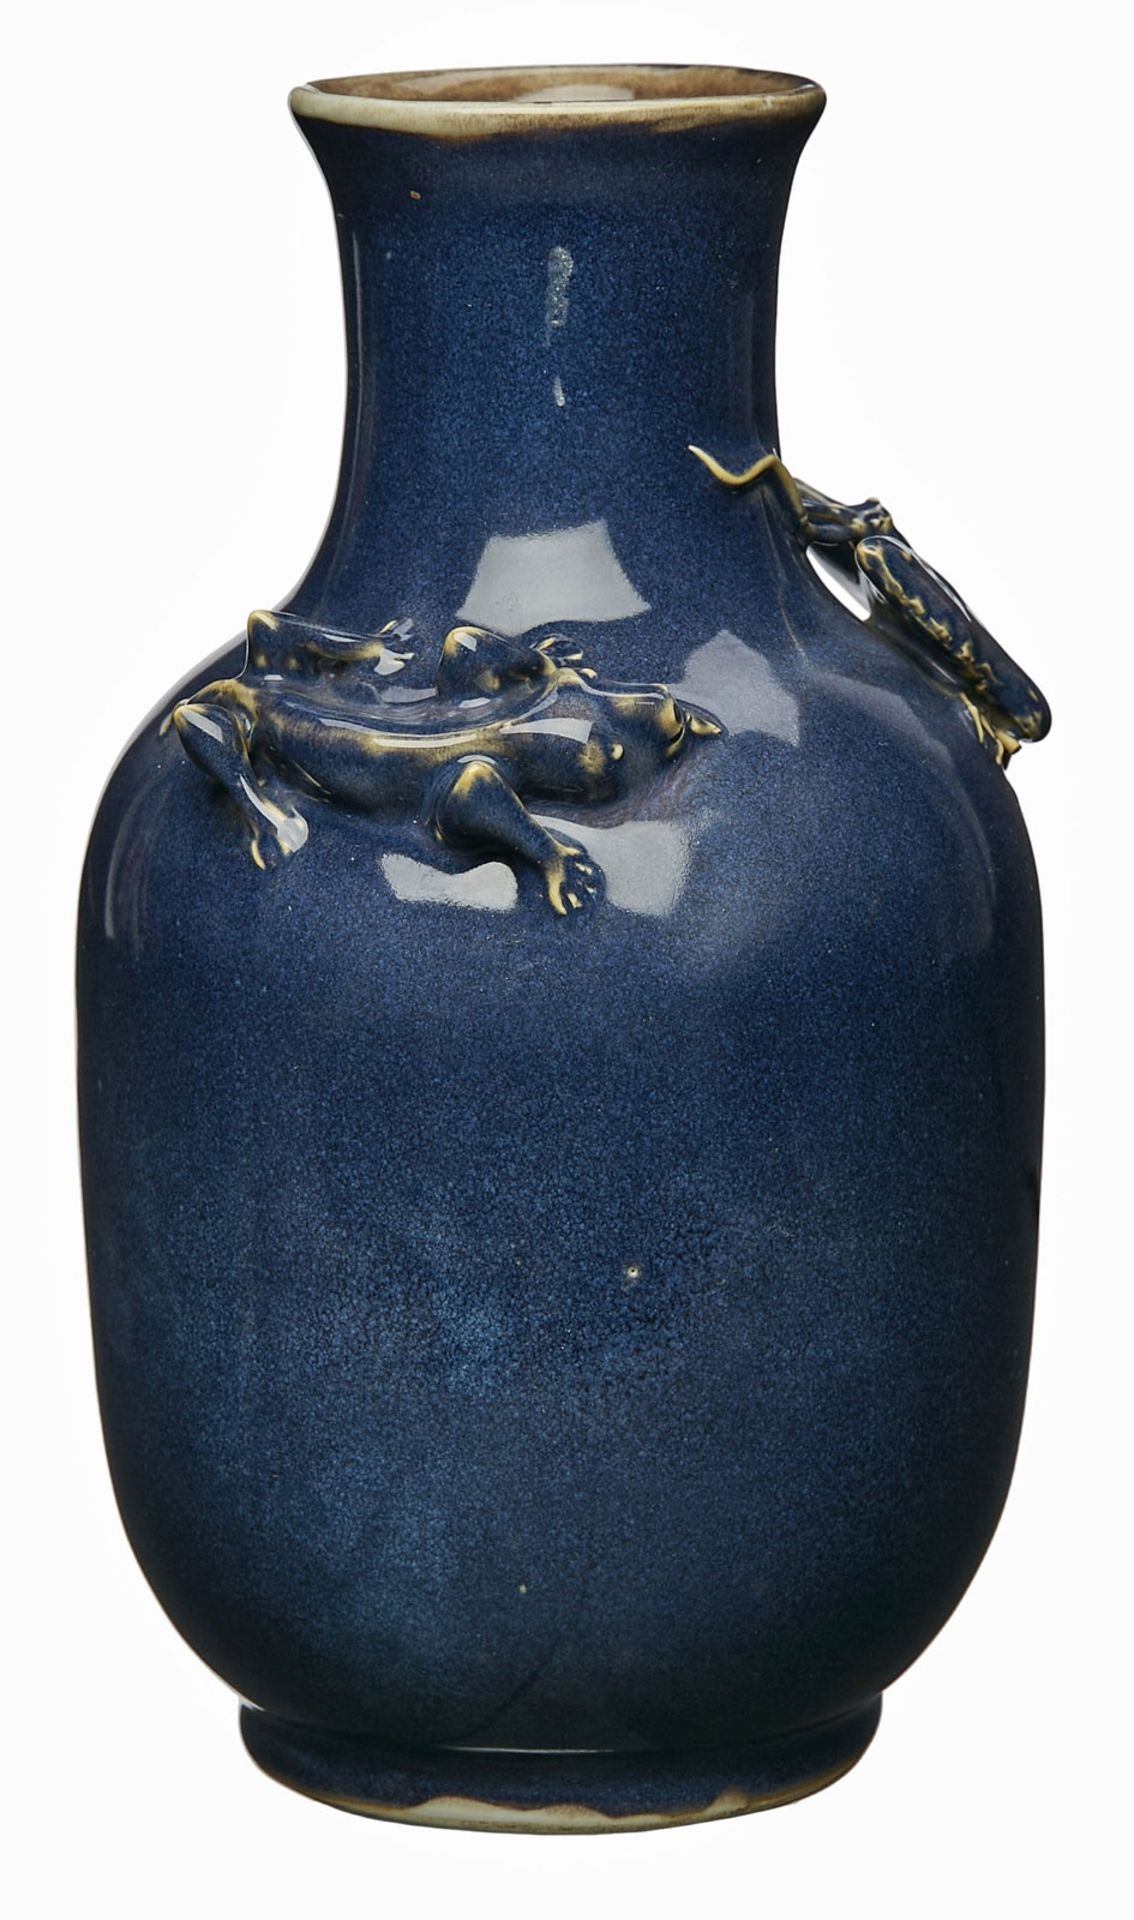 Kl. Vase, China wohl Anf. 20. Jh. - Bild 2 aus 3